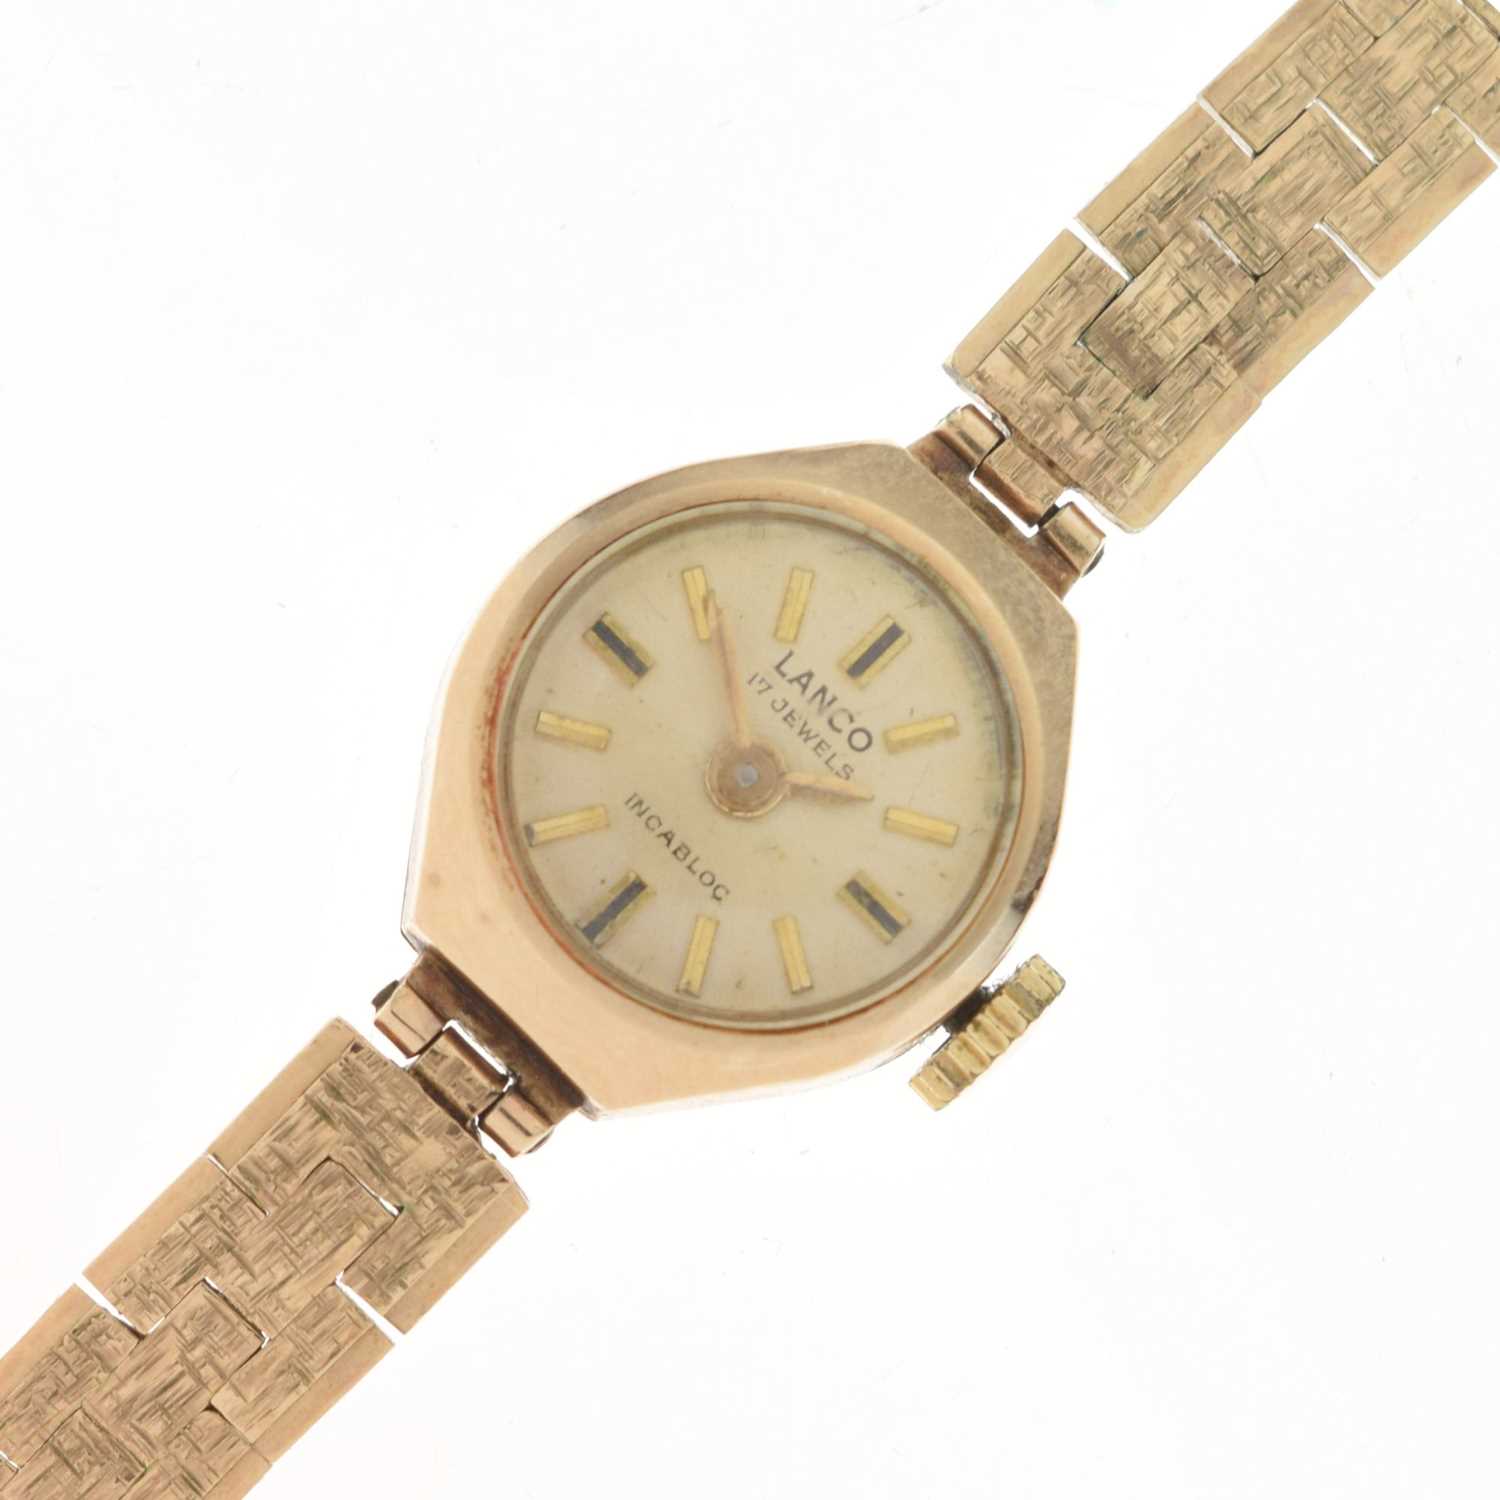 Lanco - Lady's 9ct gold bracelet watch